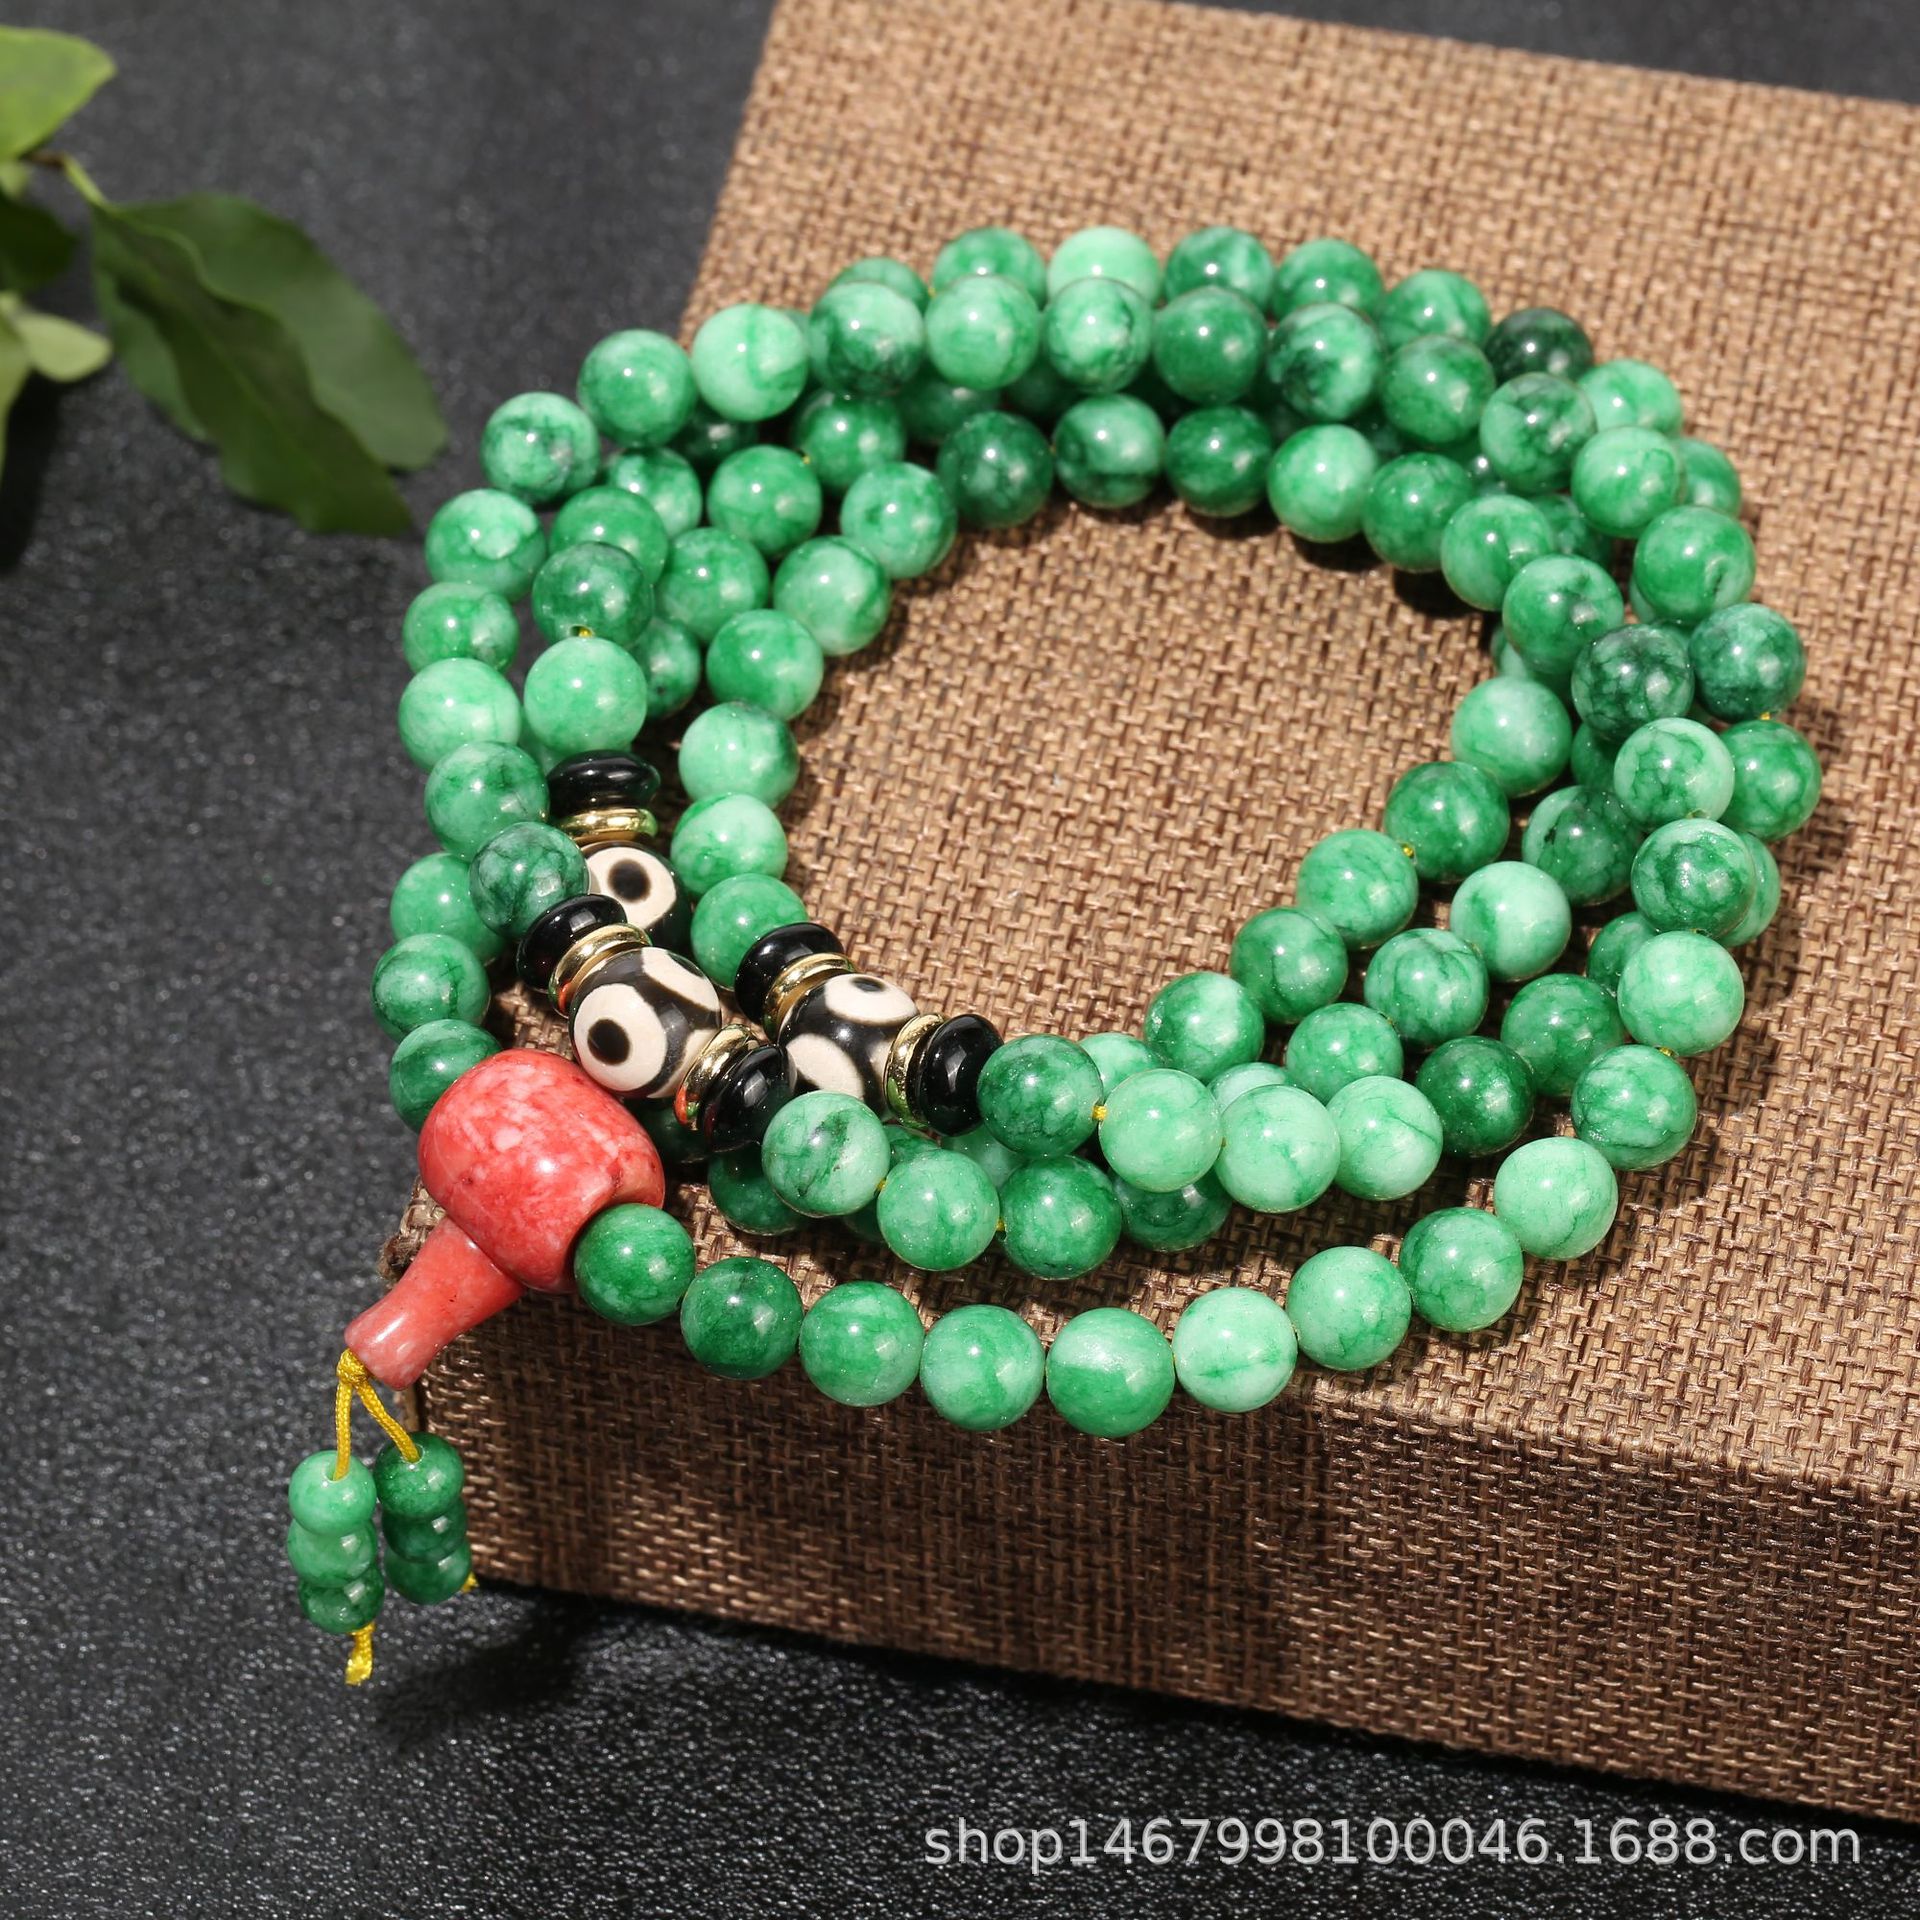 Green jade and Tibetan aagate beads